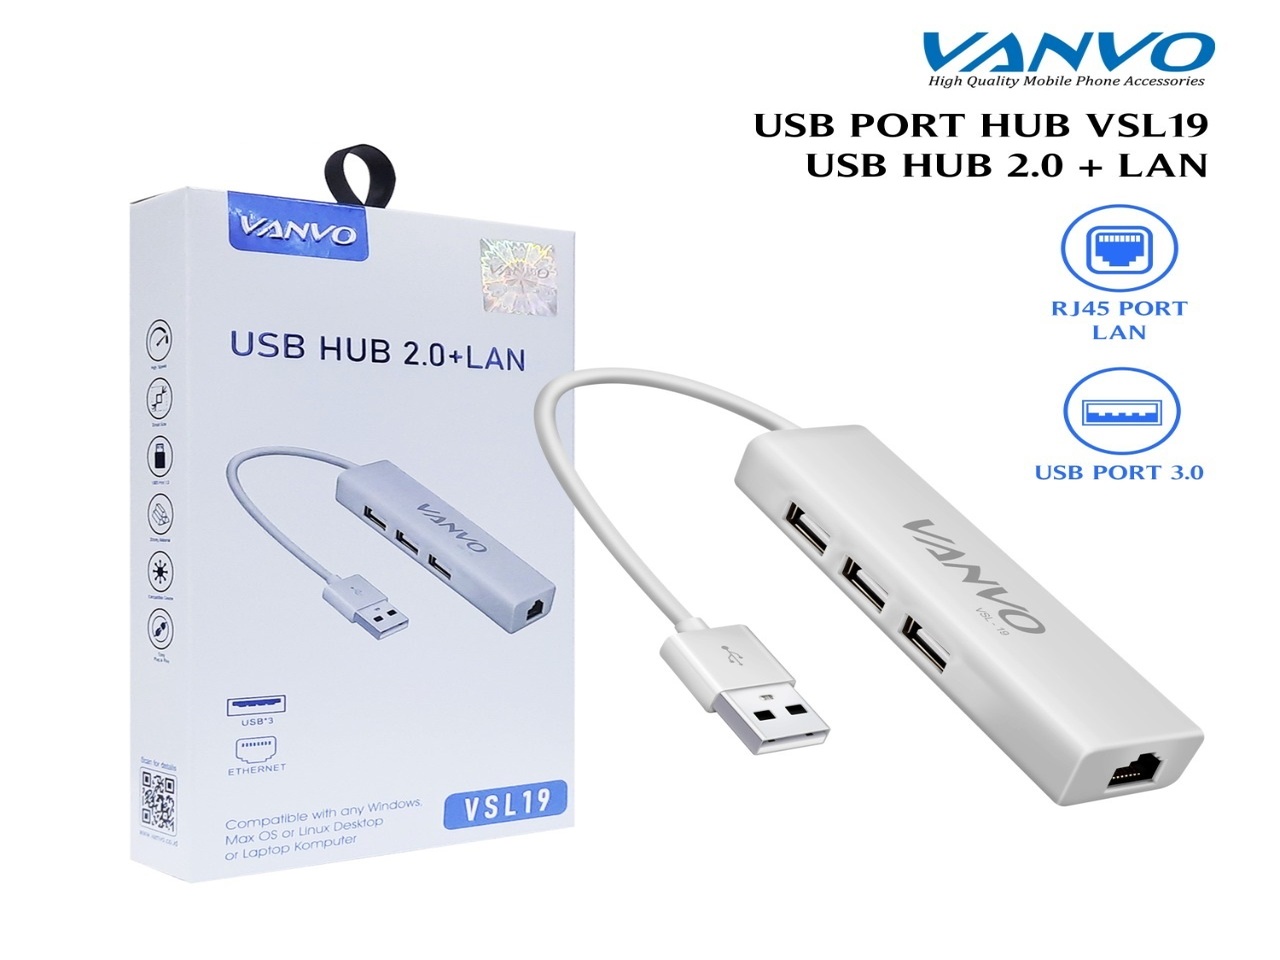 USB-HUB-VANVO-VSL19-3-USB-RJ45-PORT-LAN